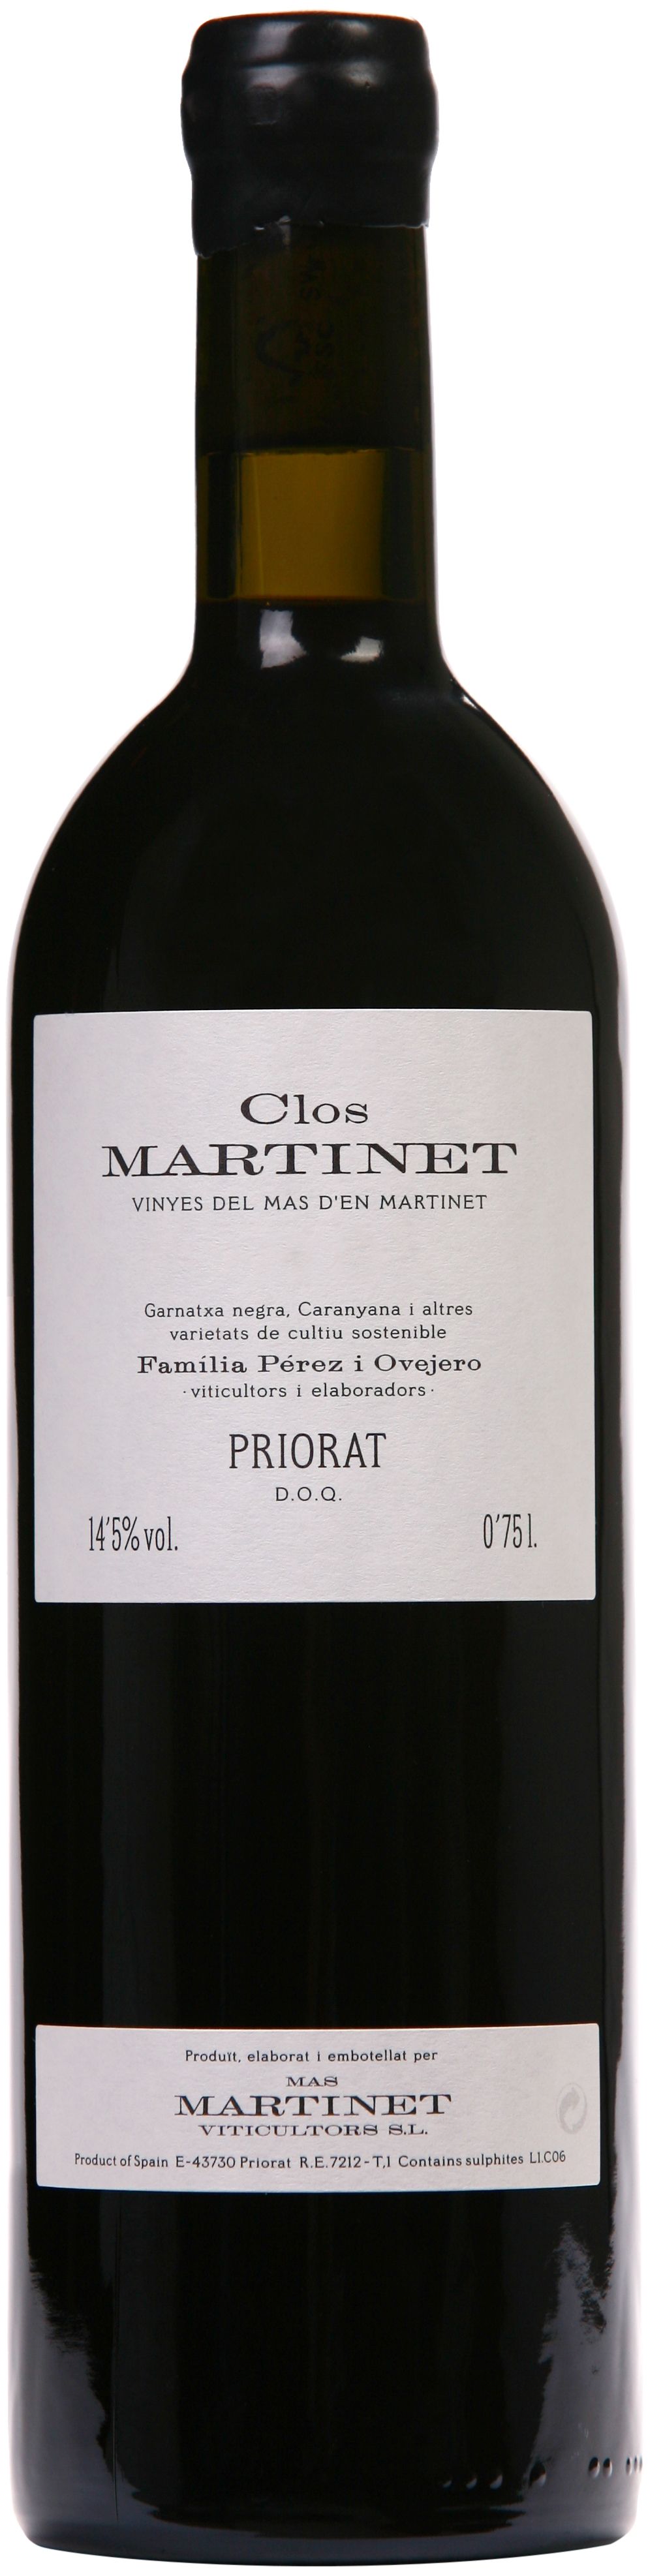 Mas Martinet, Clos Martinet, 2003